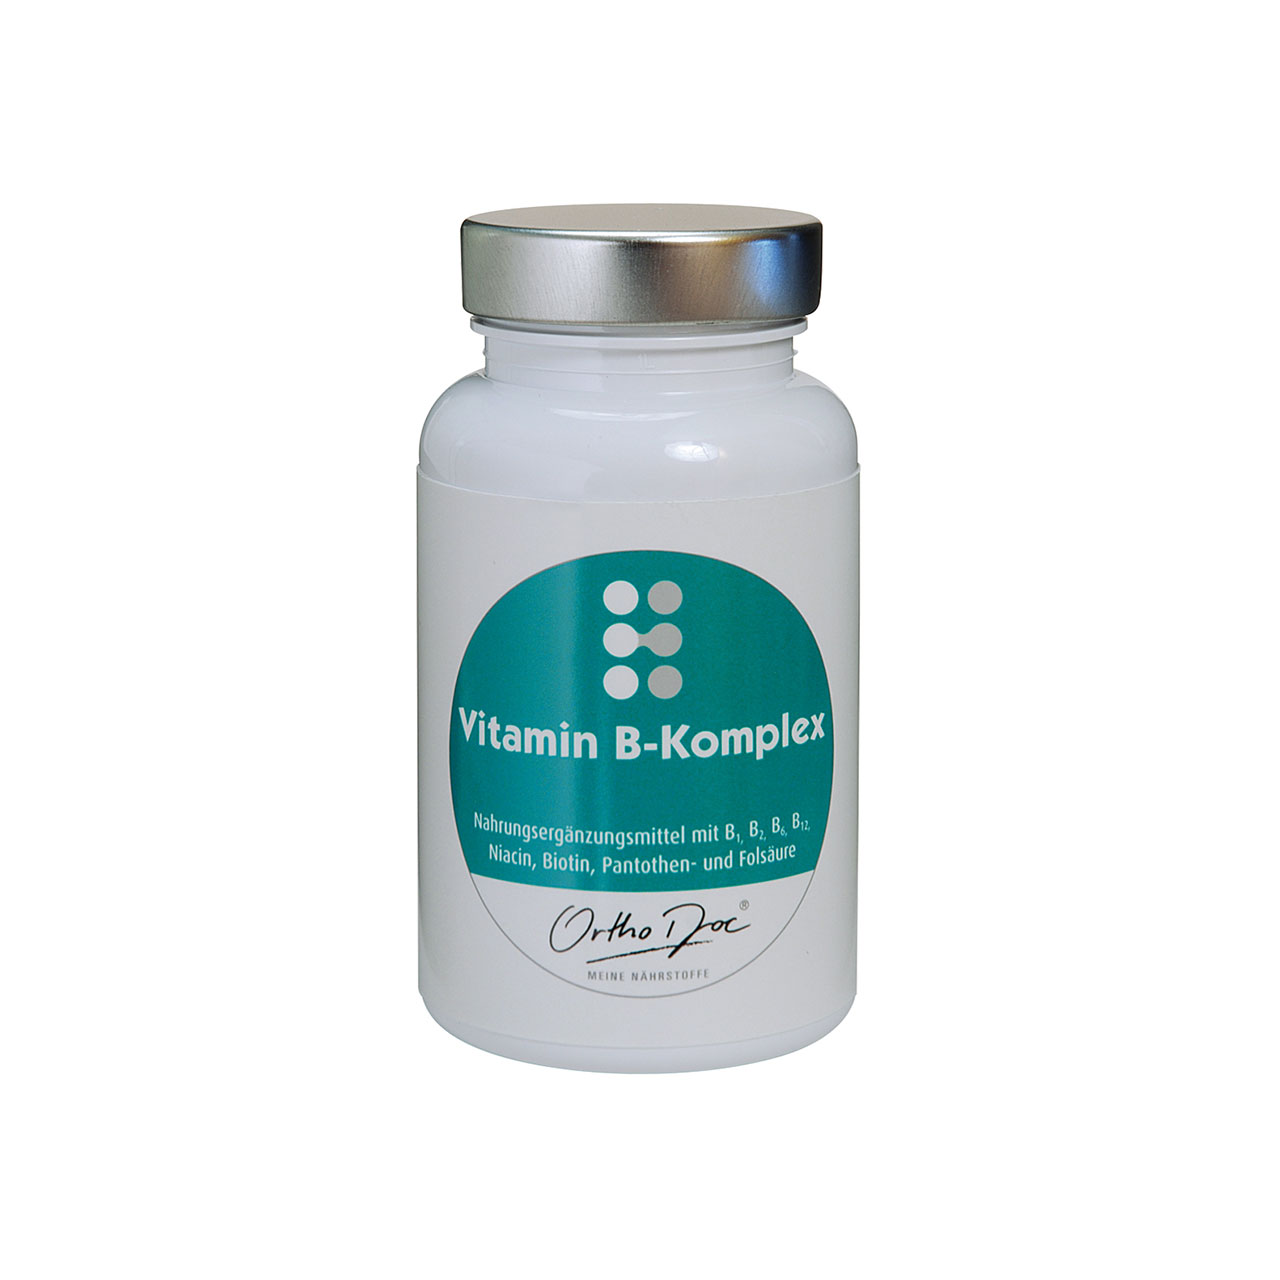 OrthoDoc® Vitamin B-Komplex (60 Kaps.)